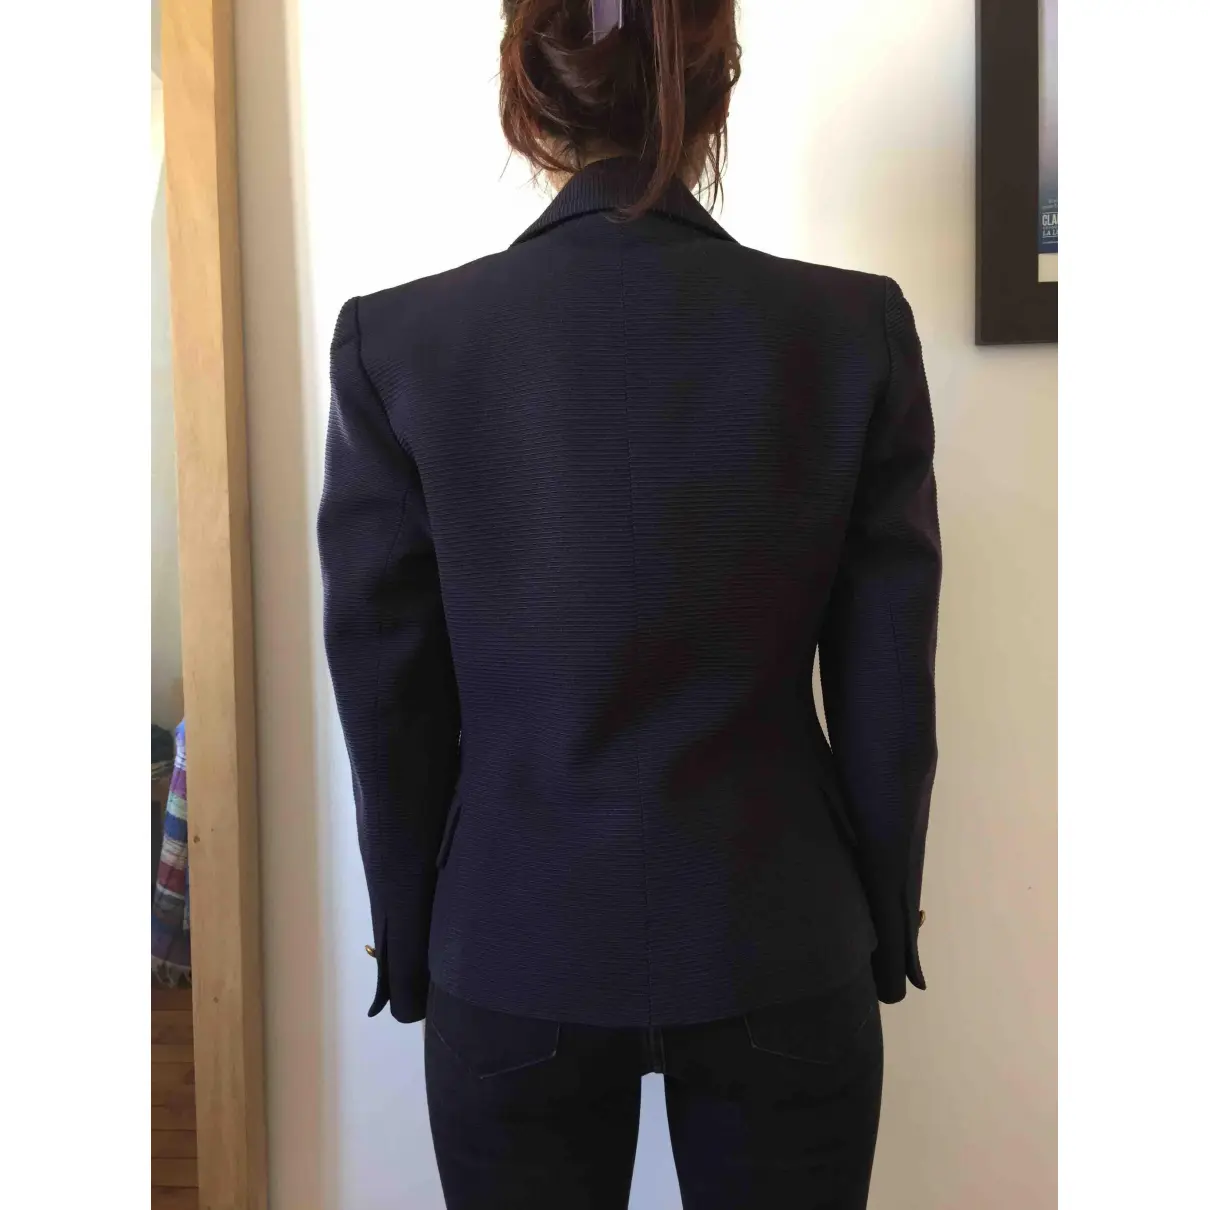 Buy Yves Saint Laurent Navy Cotton Jacket online